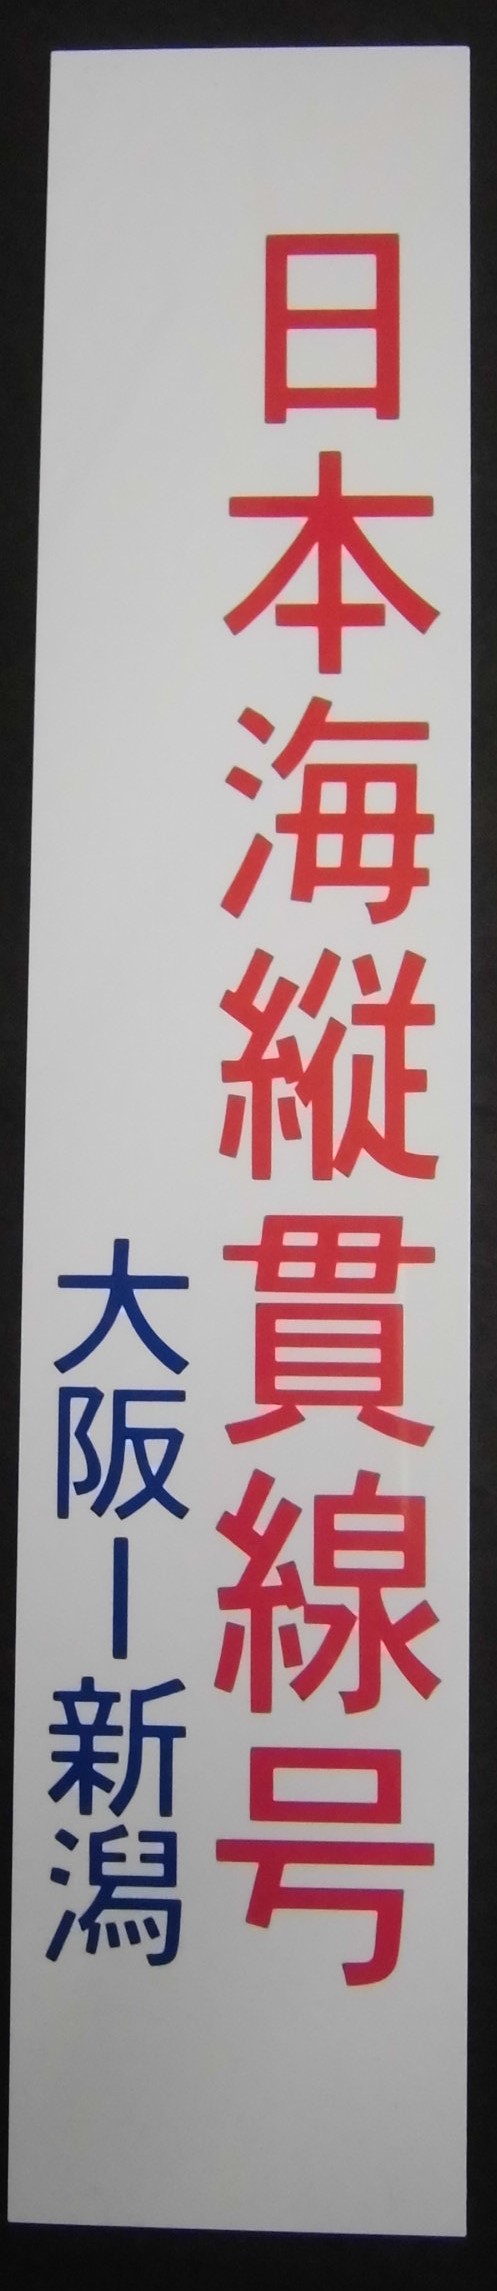 画像1: ドア表示プレート「日本海縦貫線号 大阪ー新潟」・ 「白無地」